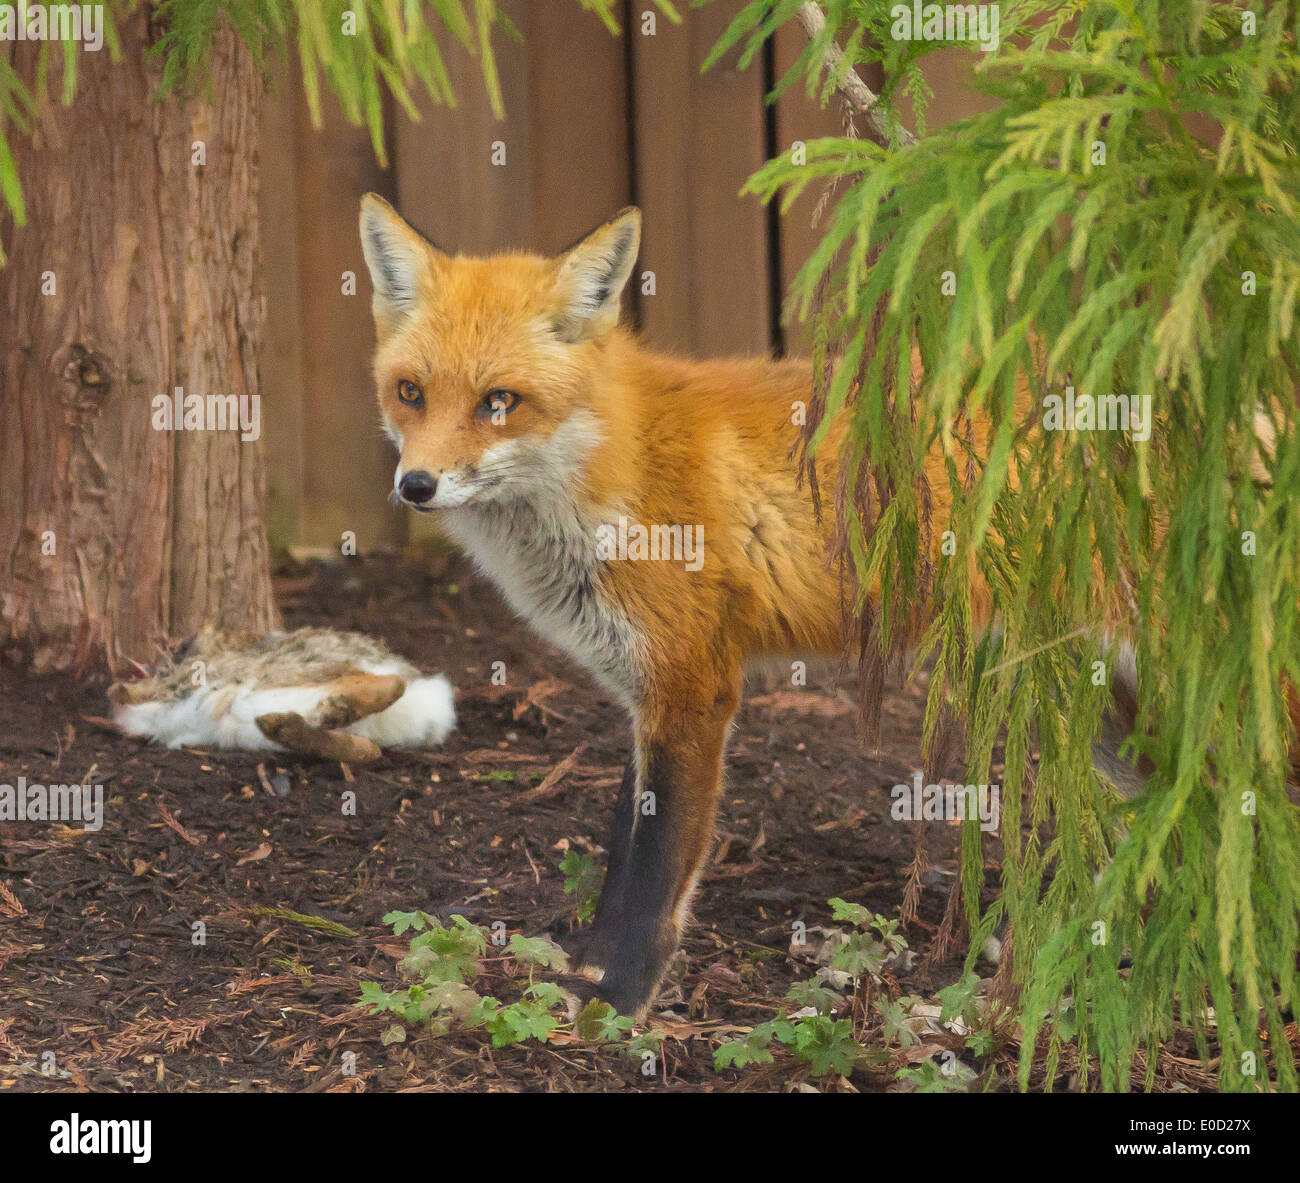 ARLINGTON, VIRGINIA, USA - Wild red fox, vulpes vulpes, in residential garden with rabbit carcass. Stock Photo